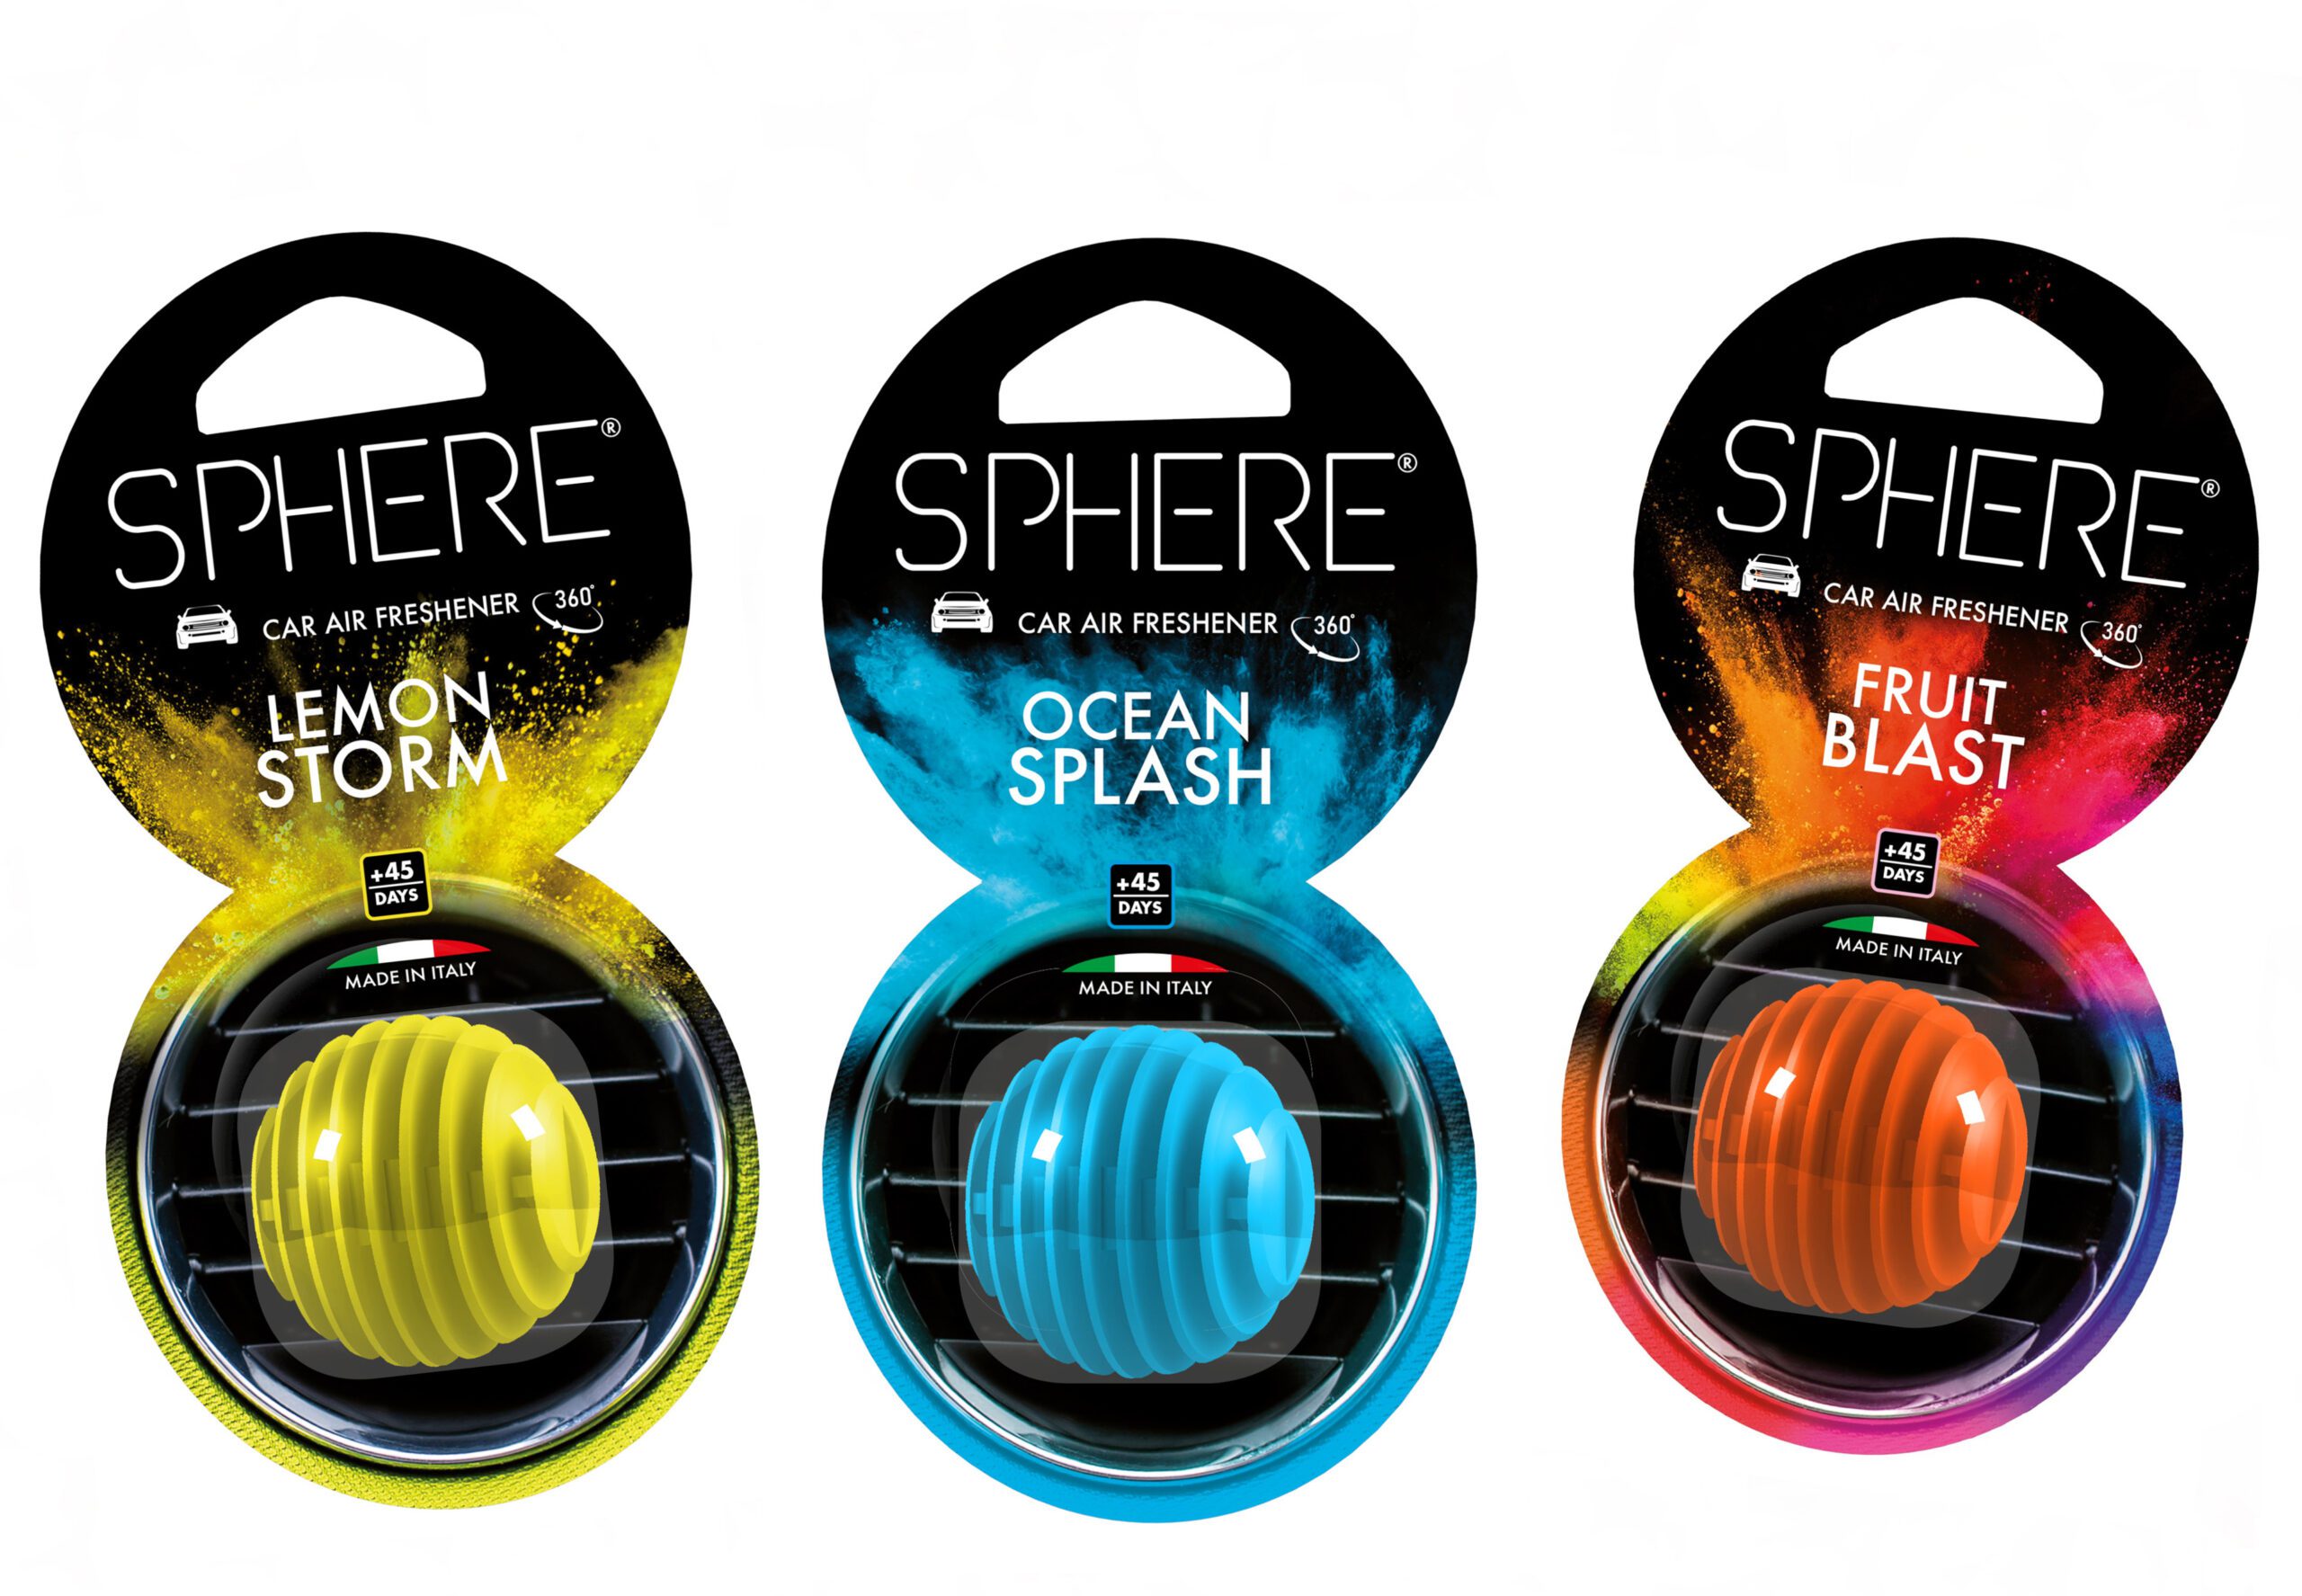 Sphere Car Air Fresheners